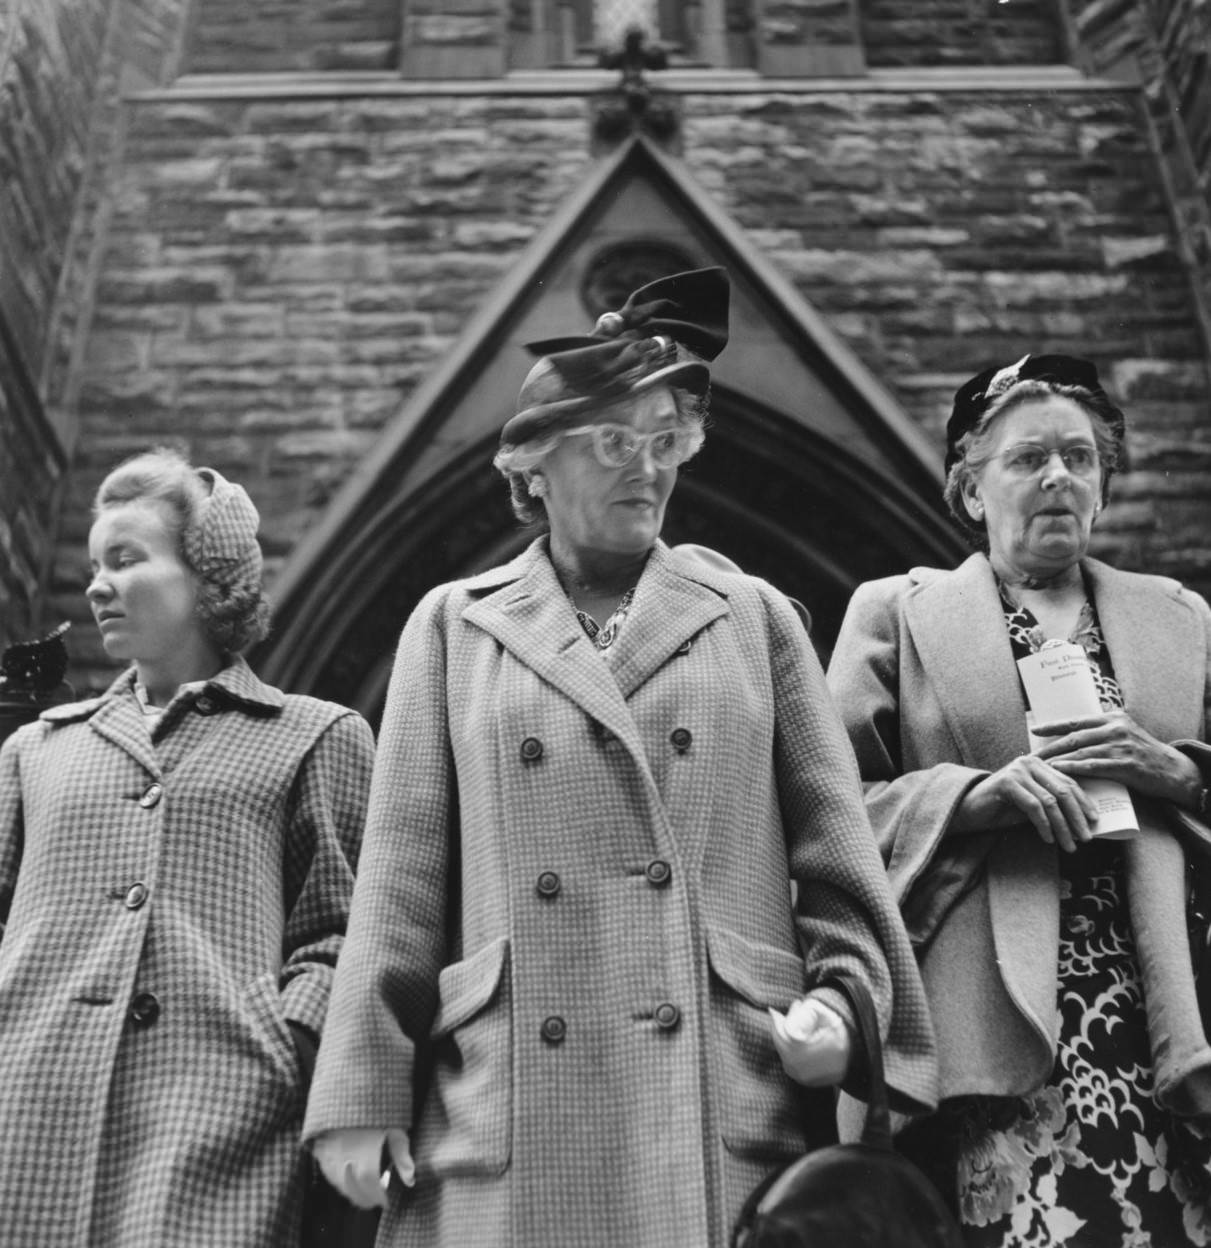 Outside Presbyterian Church on Sixth Avenue. Pittsburgh, Pennsylvania, 1956